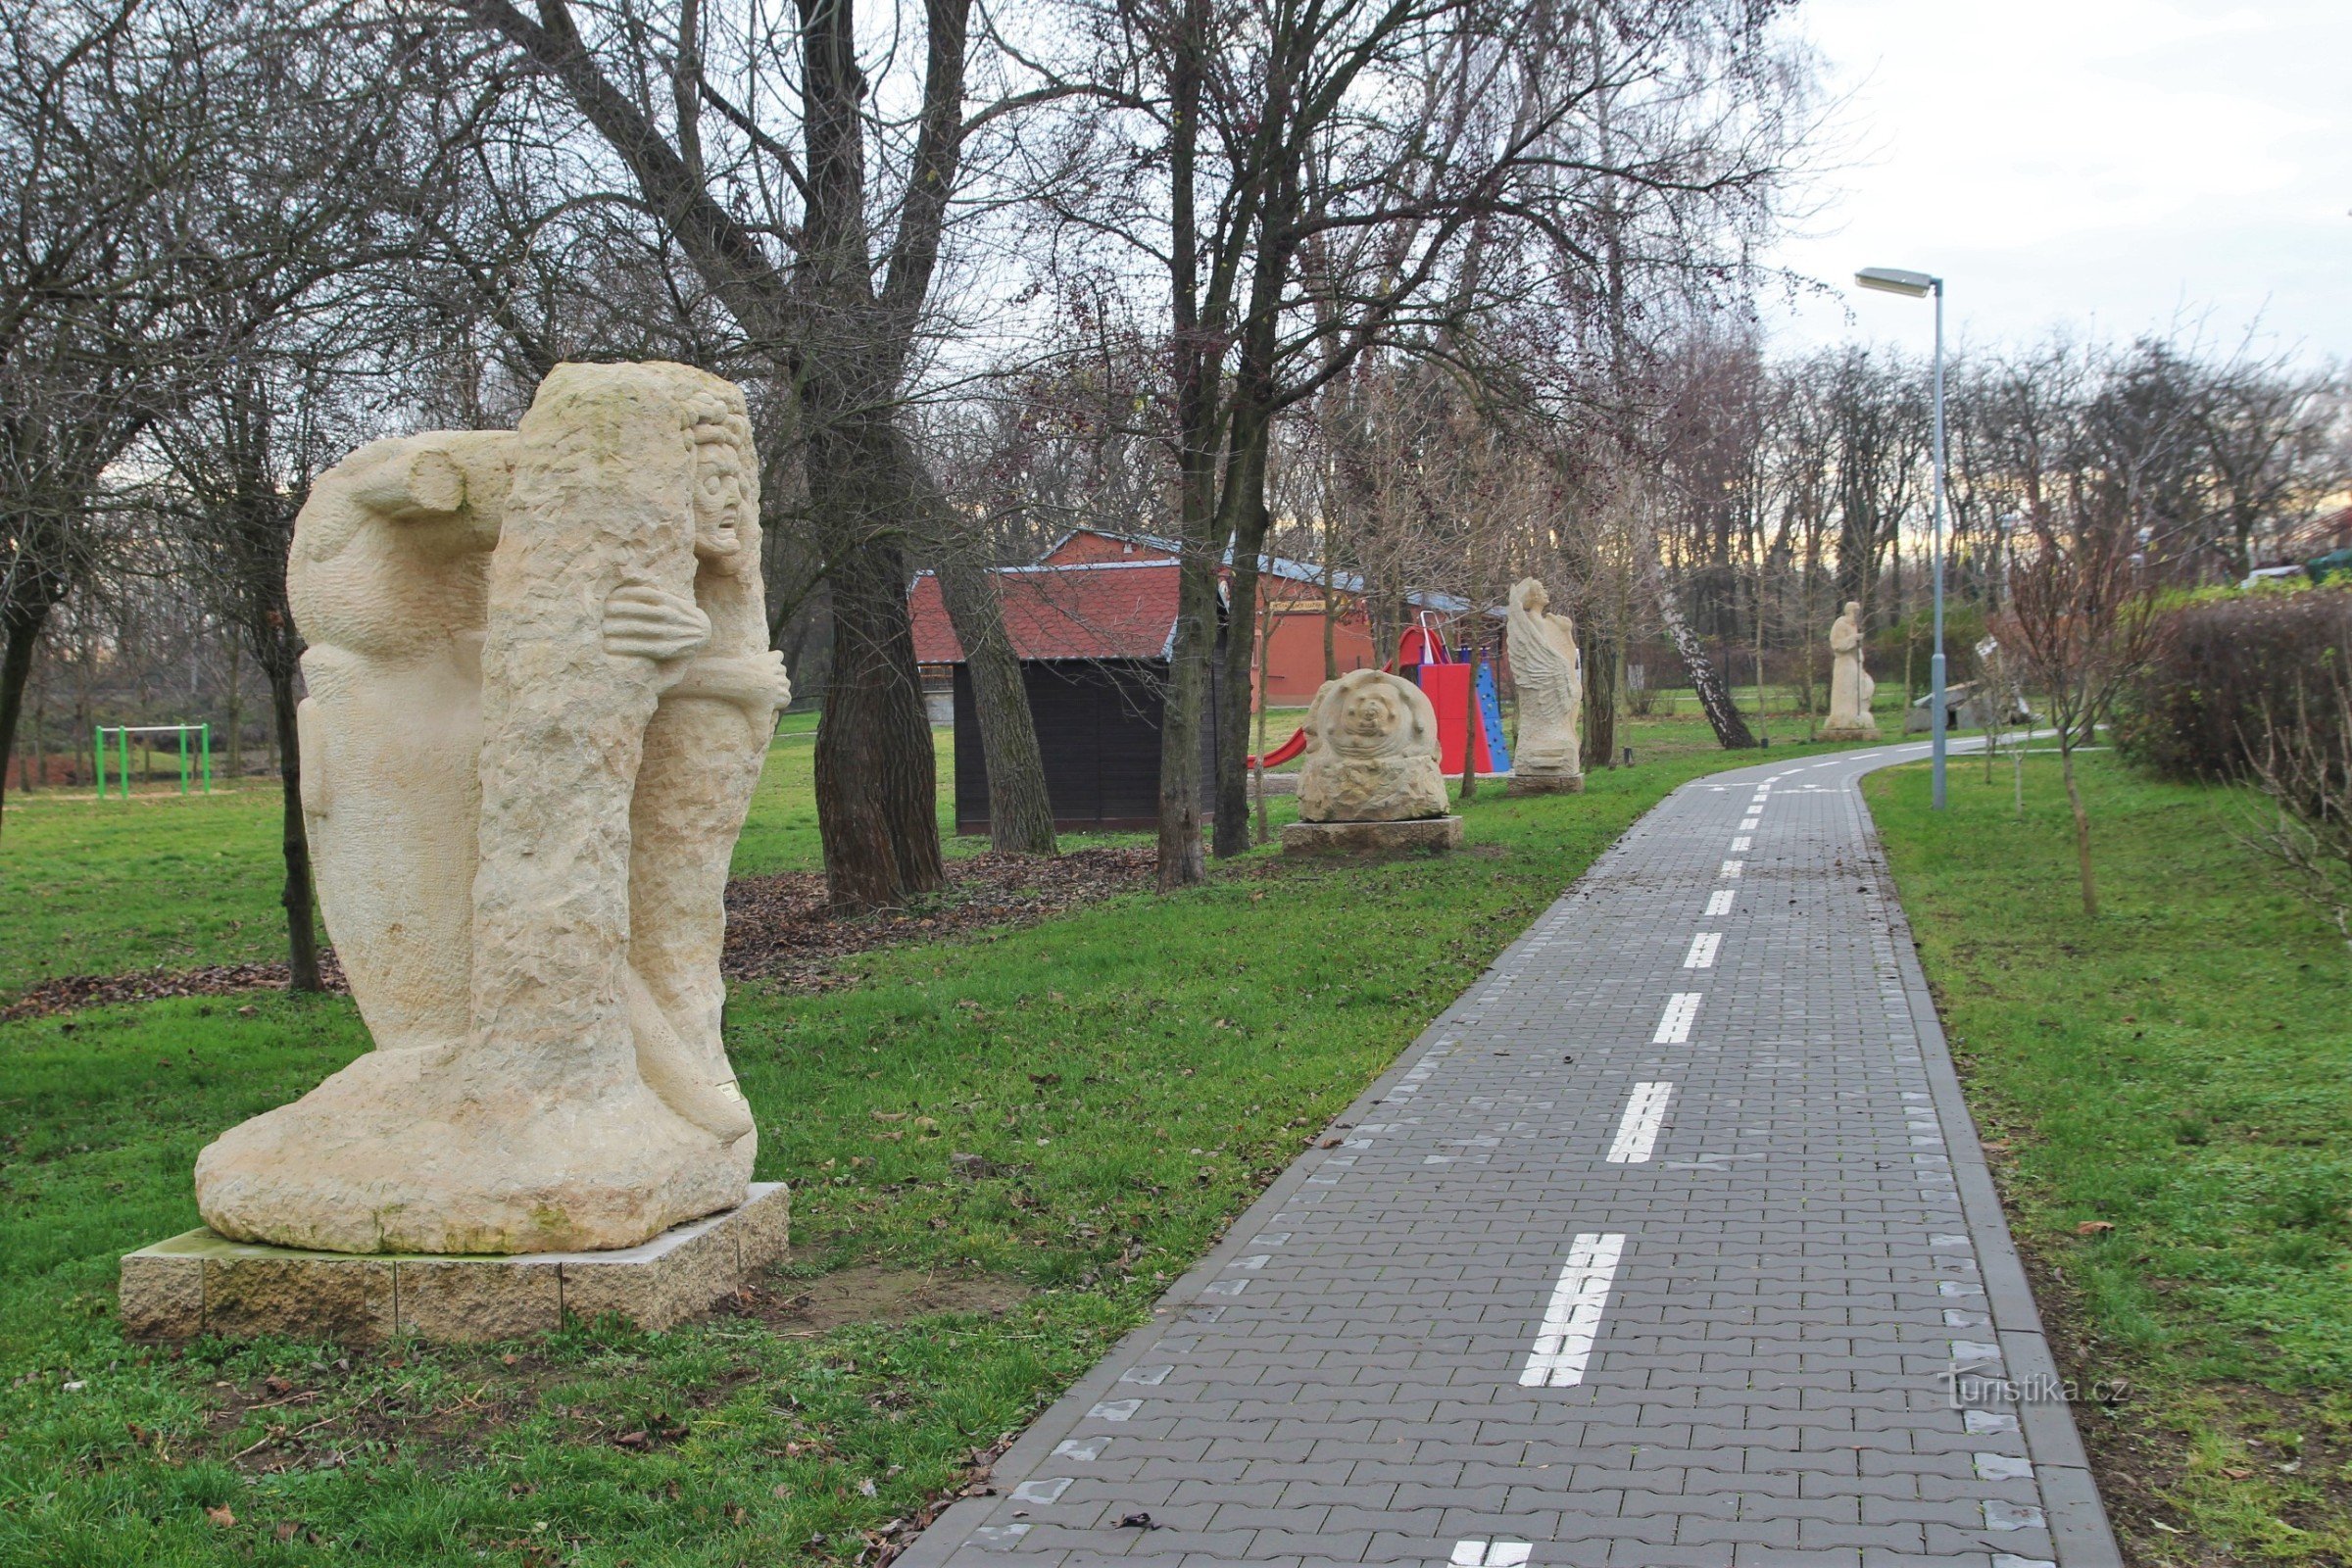 Statues along the bike path